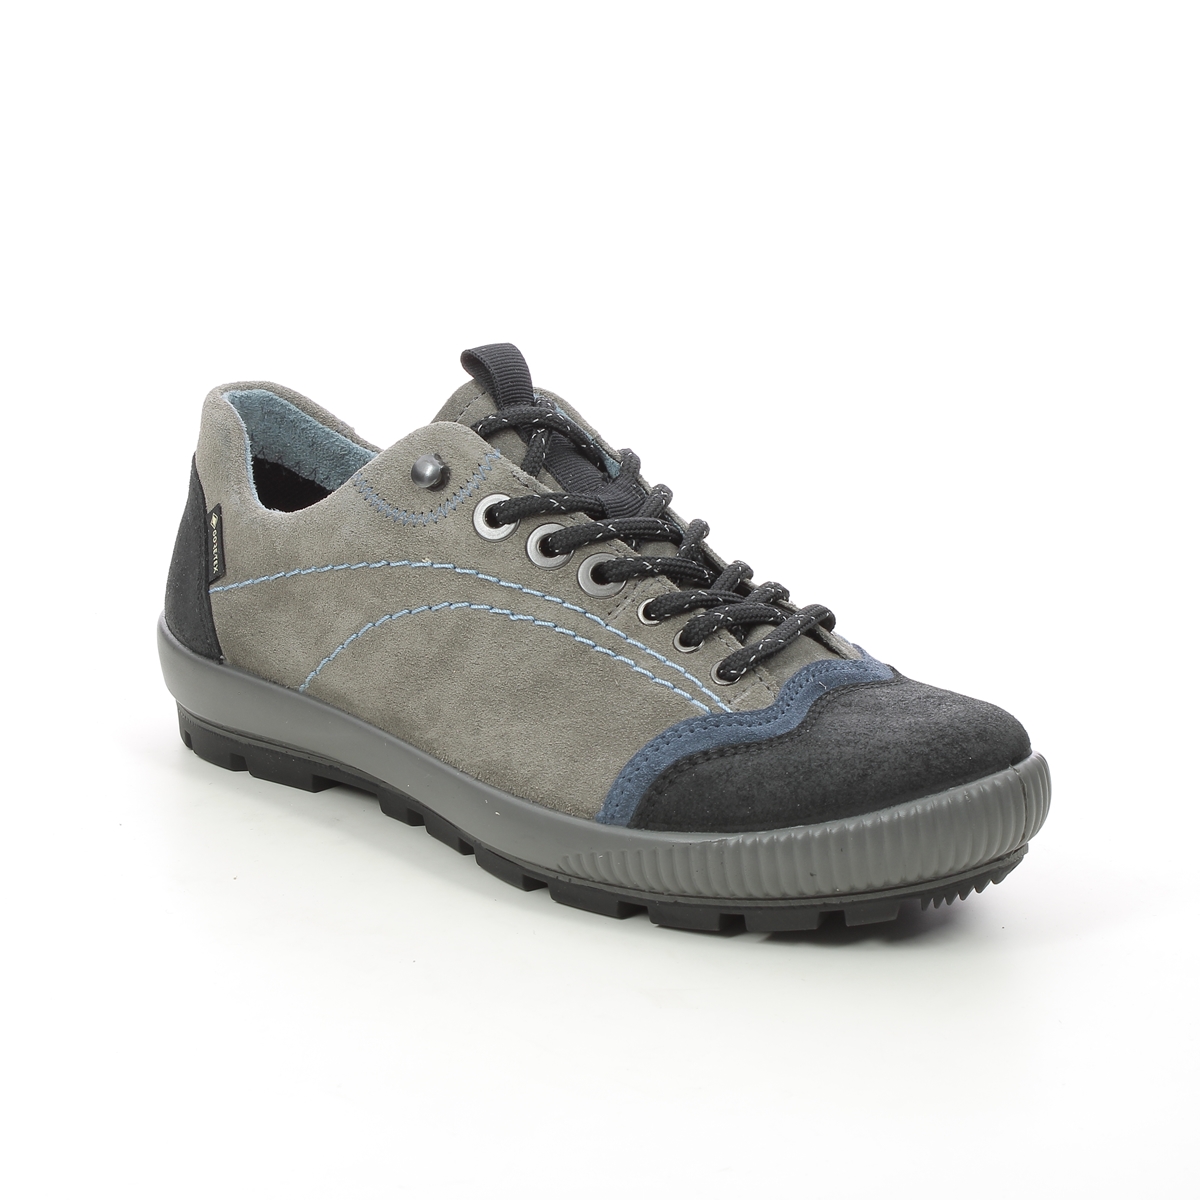 Legero Tanaro Trek Gtx Grey Suede Womens Walking Shoes 2000122-2800 In Size 9 In Plain Grey Suede